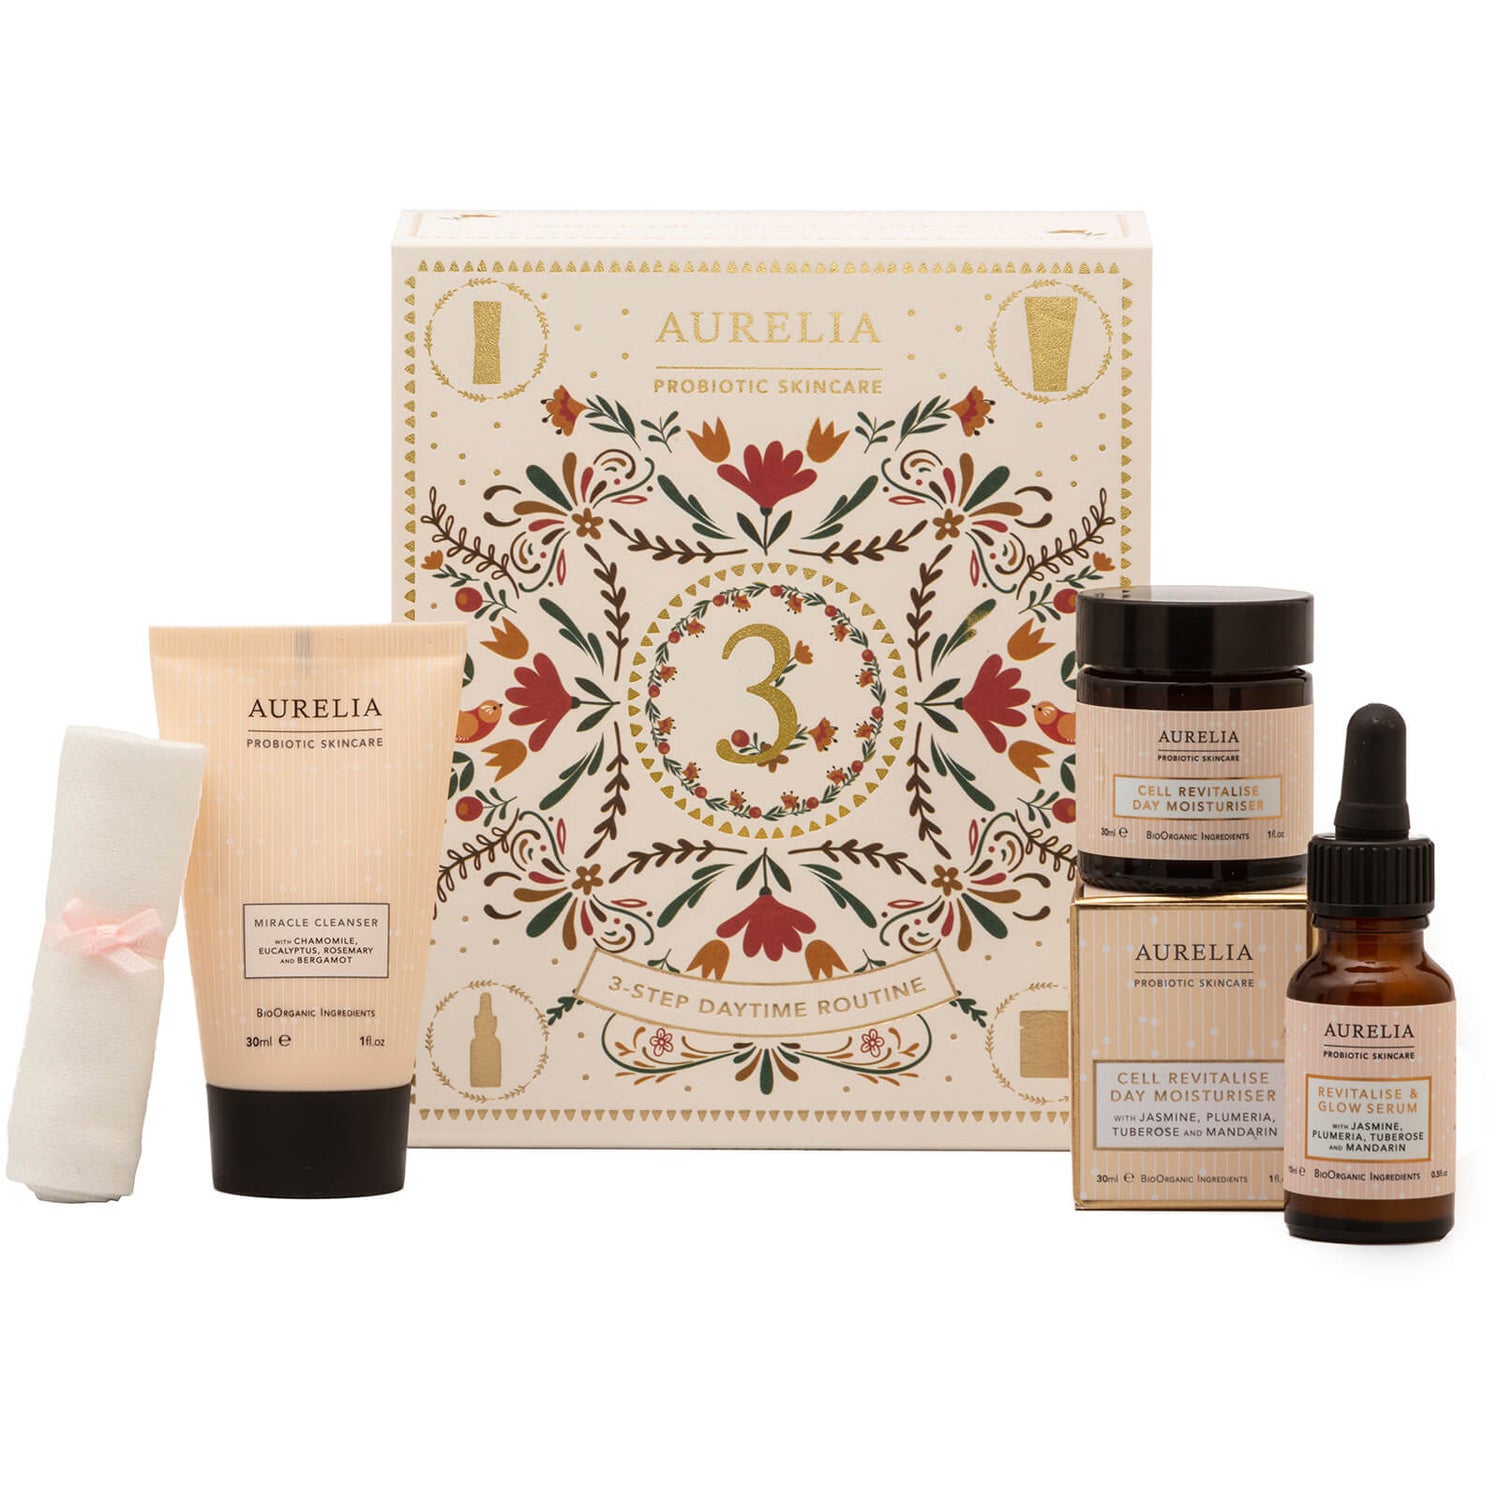 Aurelia Probiotic Skincare 3-Step Daytime Routine Set (Worth £84.00)